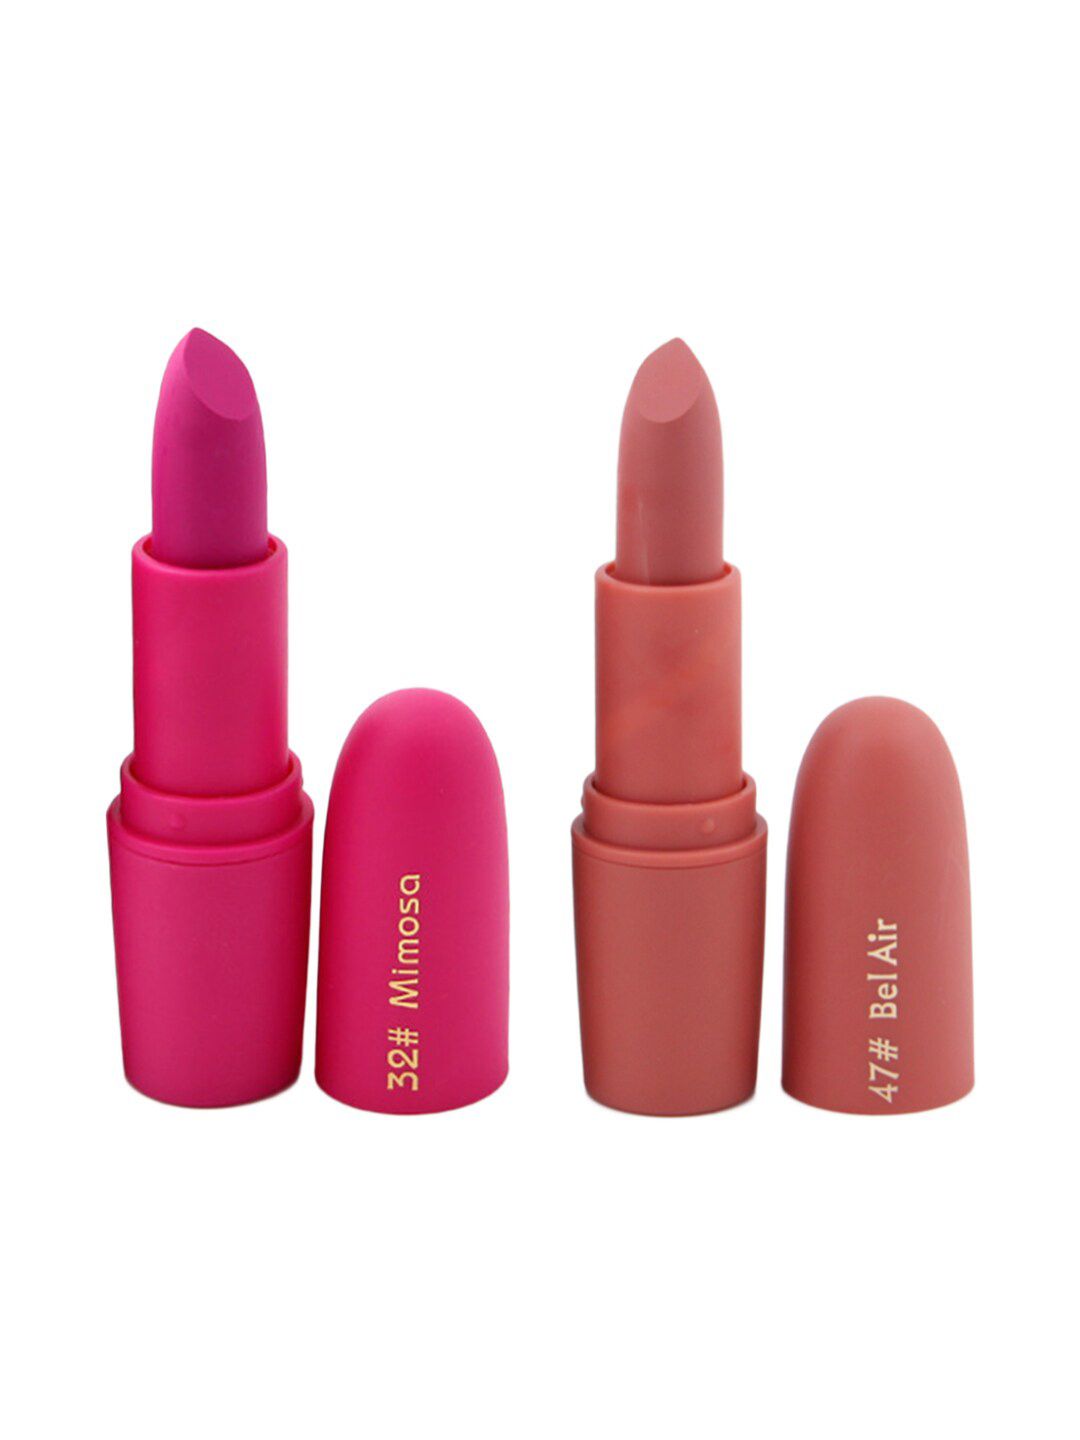 MISS ROSE Set of 2 Matte Creamy Lipsticks - Mimosa 32 & Bel Air 47 Price in India